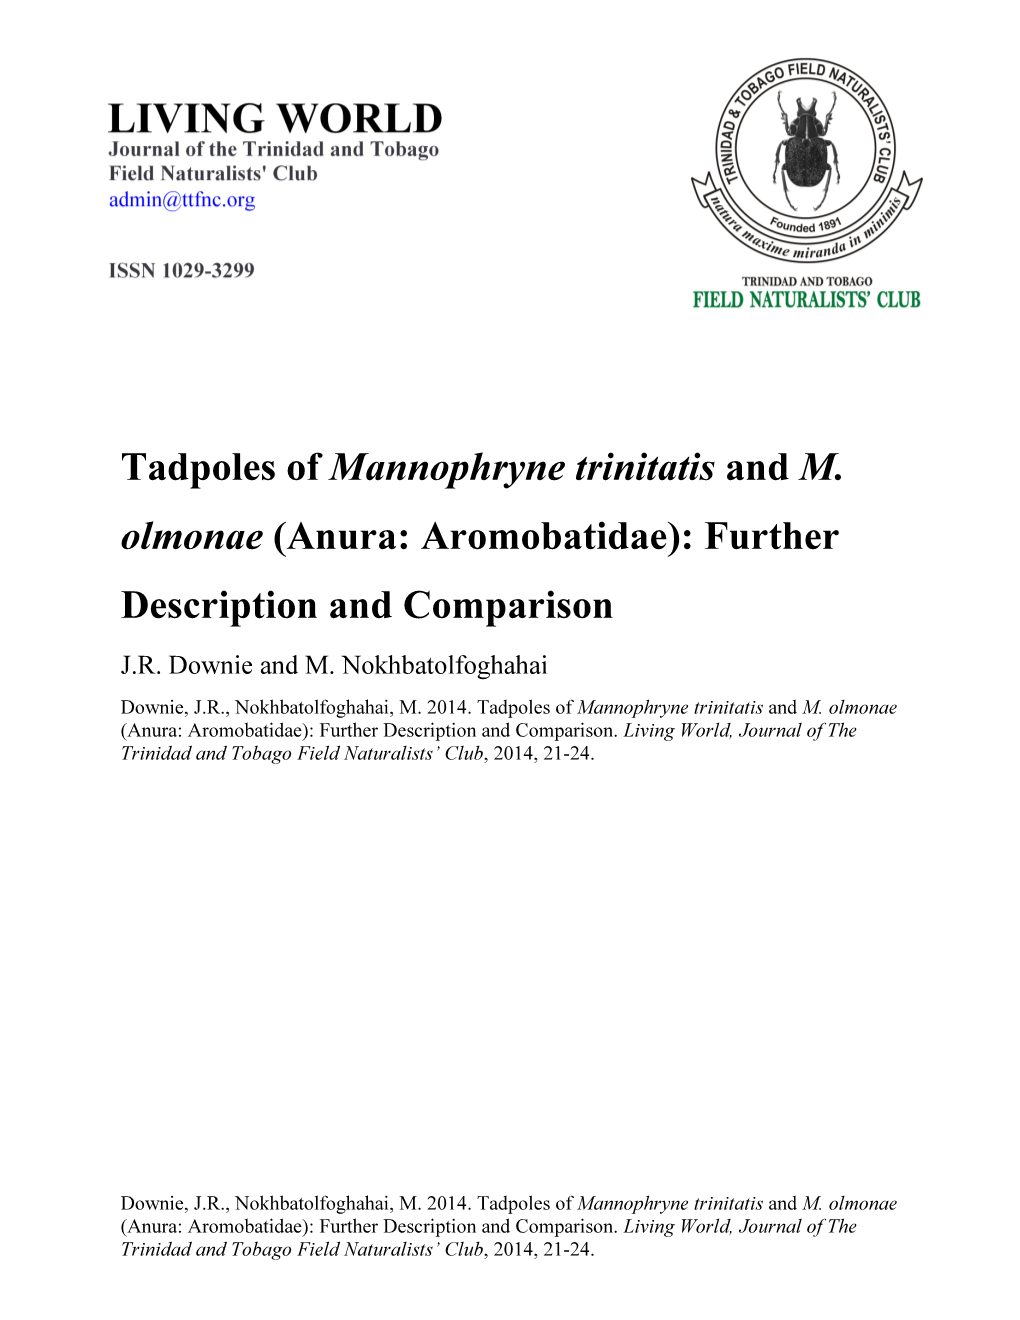 Tadpoles of Mannophryne Trinitatis and M. Olmonae (Anura: Aromobatidae): Further Description and Comparison J.R